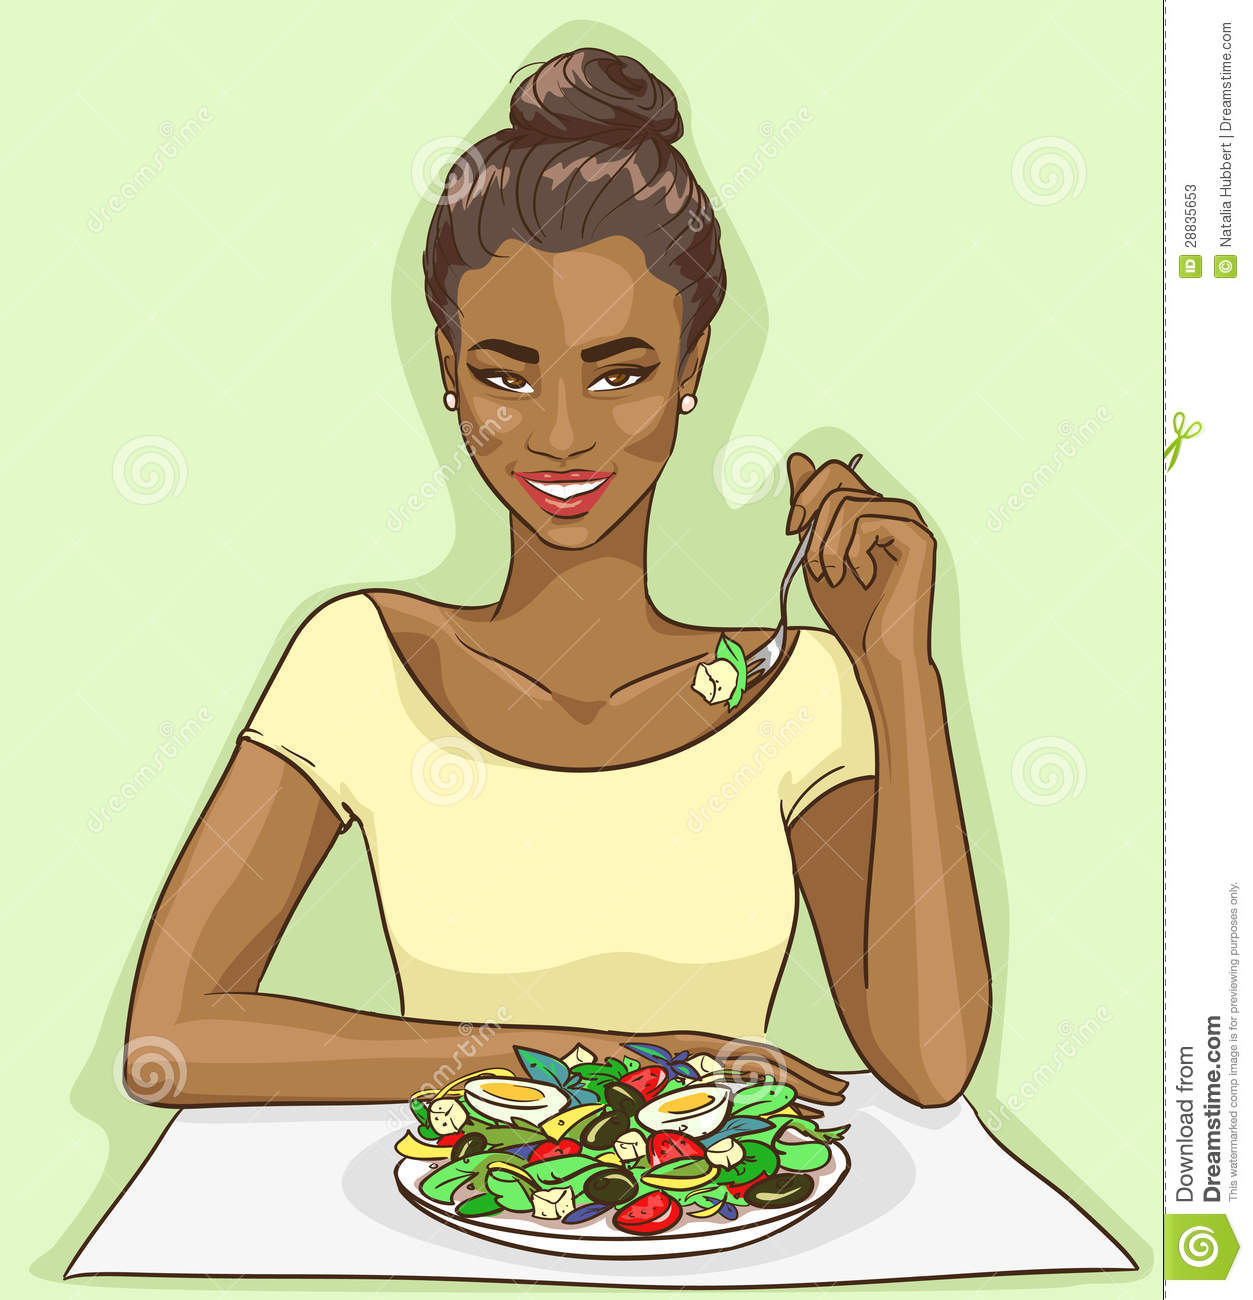 African American Woman Eating Salad Stock Photos   Image  28835653